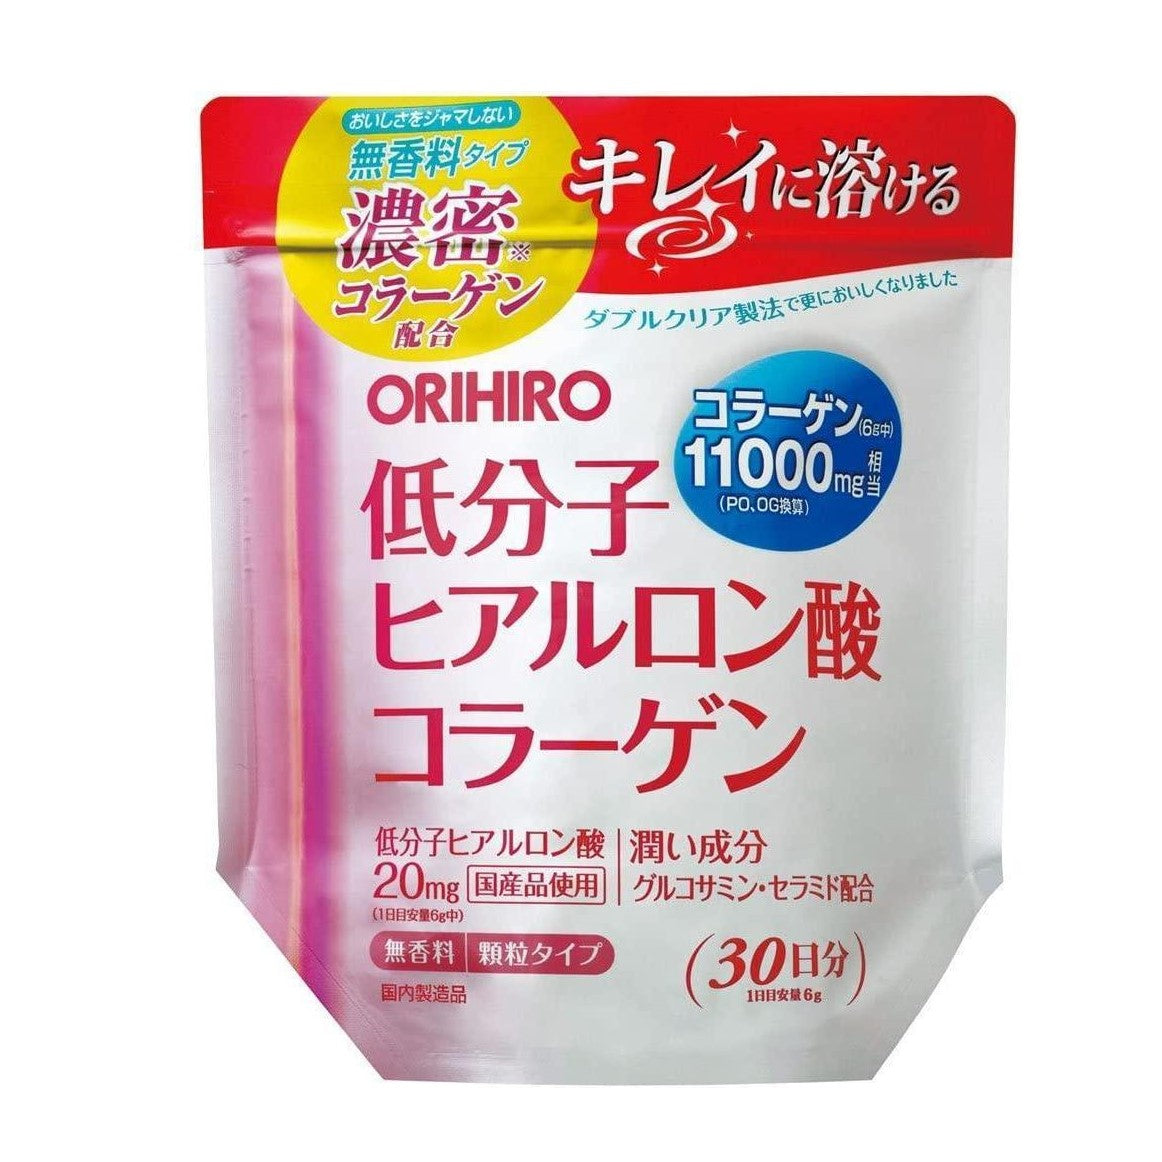 Orihiro Hyaluronic Acid Collagen Powder (30 days)